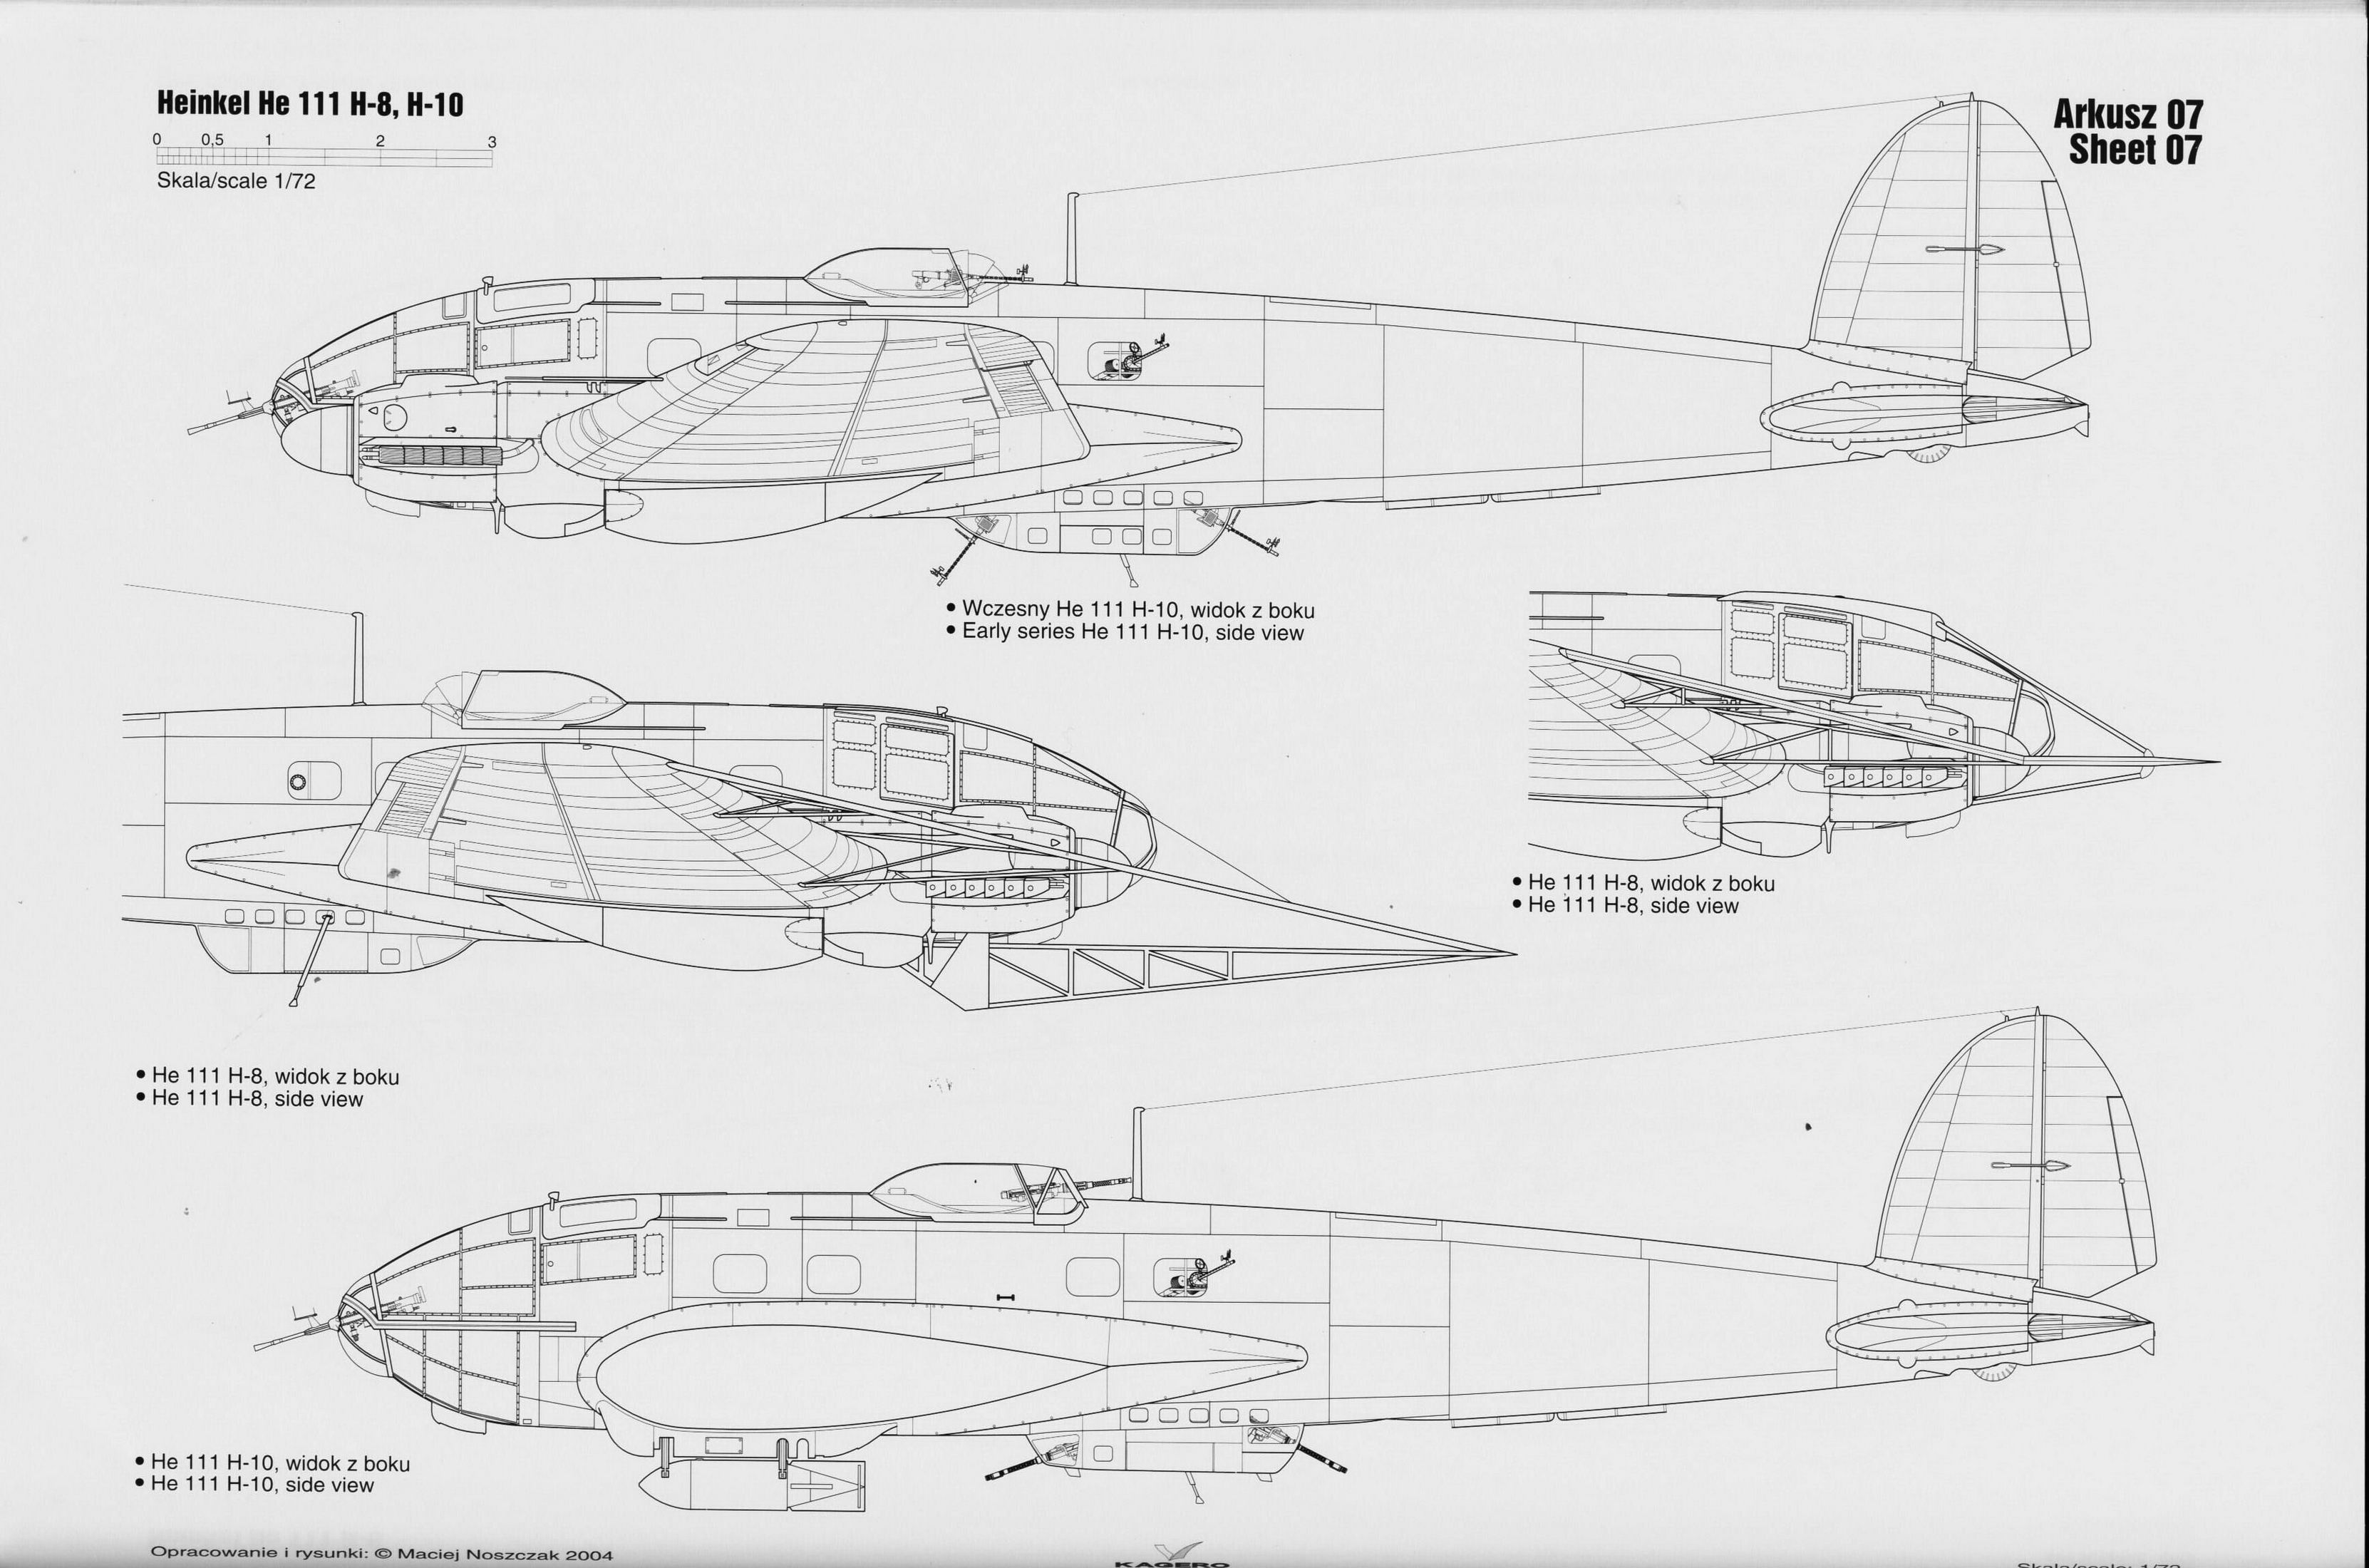 Artwork line drawing or blue print of a Heinkel He 111H8 scale 1 72 Arkusz 01